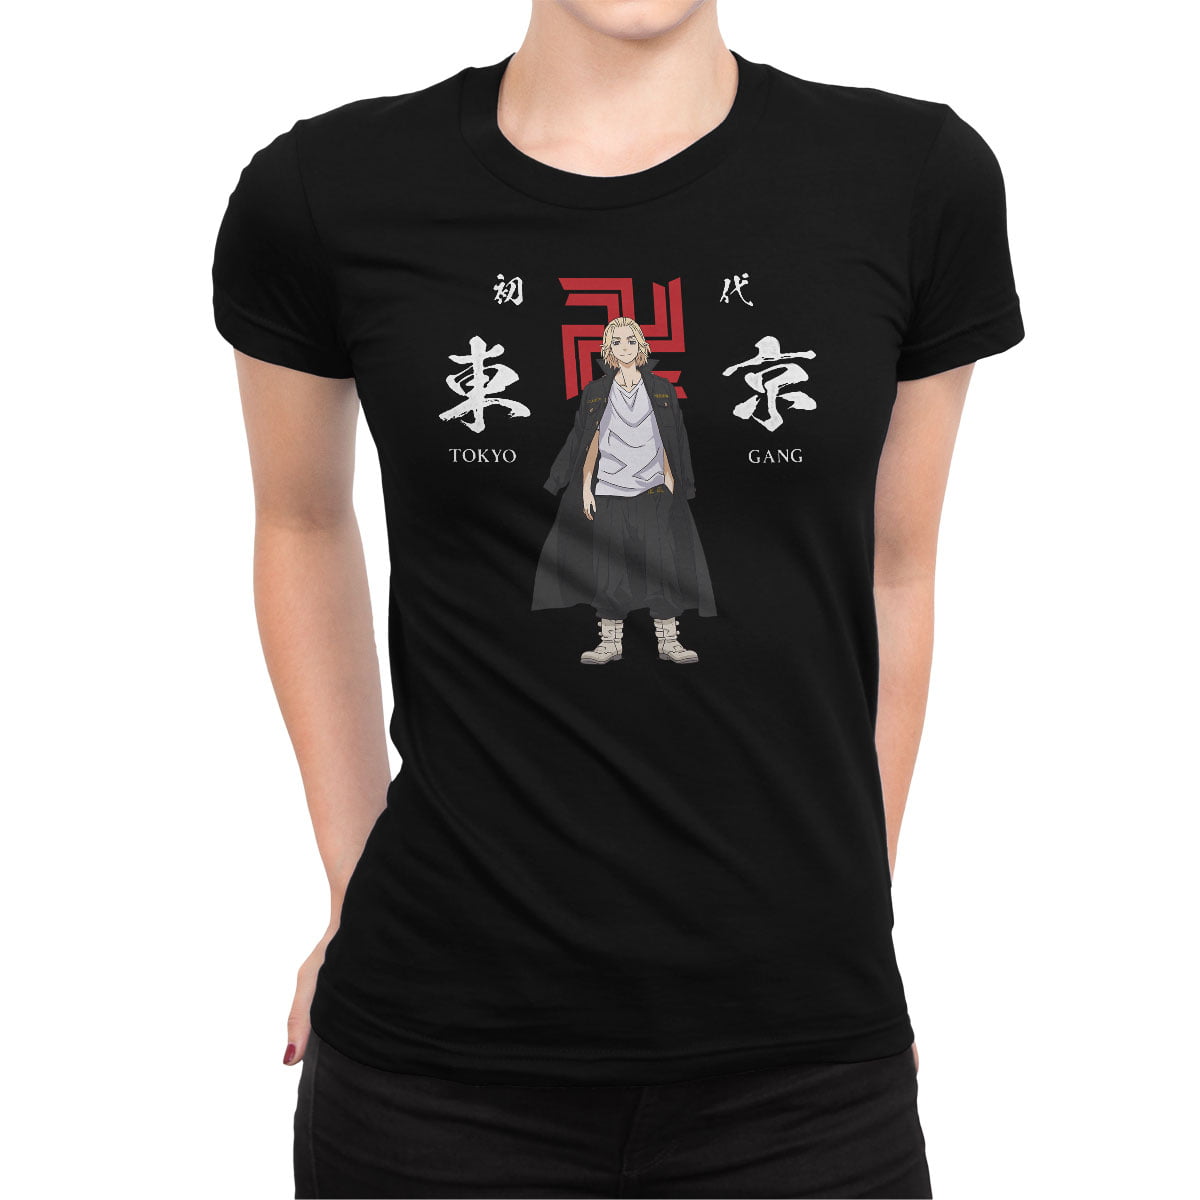 Tokyo ravengers 1 tshirt kadin s - tokyo revengers manjiro sano no4 kadın t-shirt - figurex